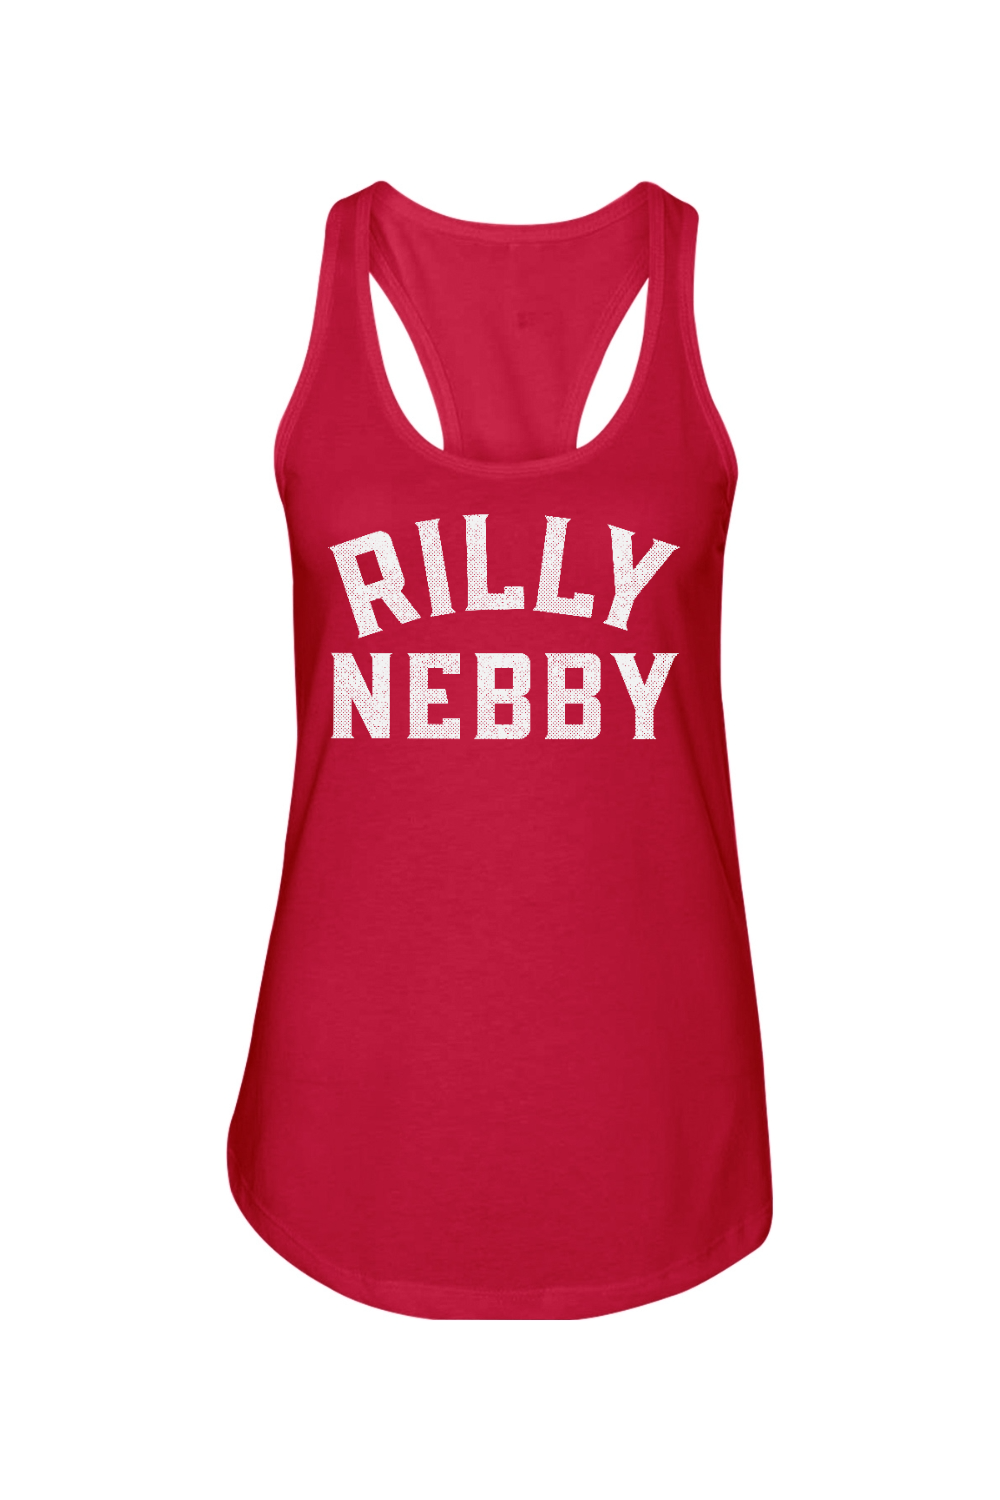 Rilly Nebby - Ladies Racerback Tank - Yinzylvania